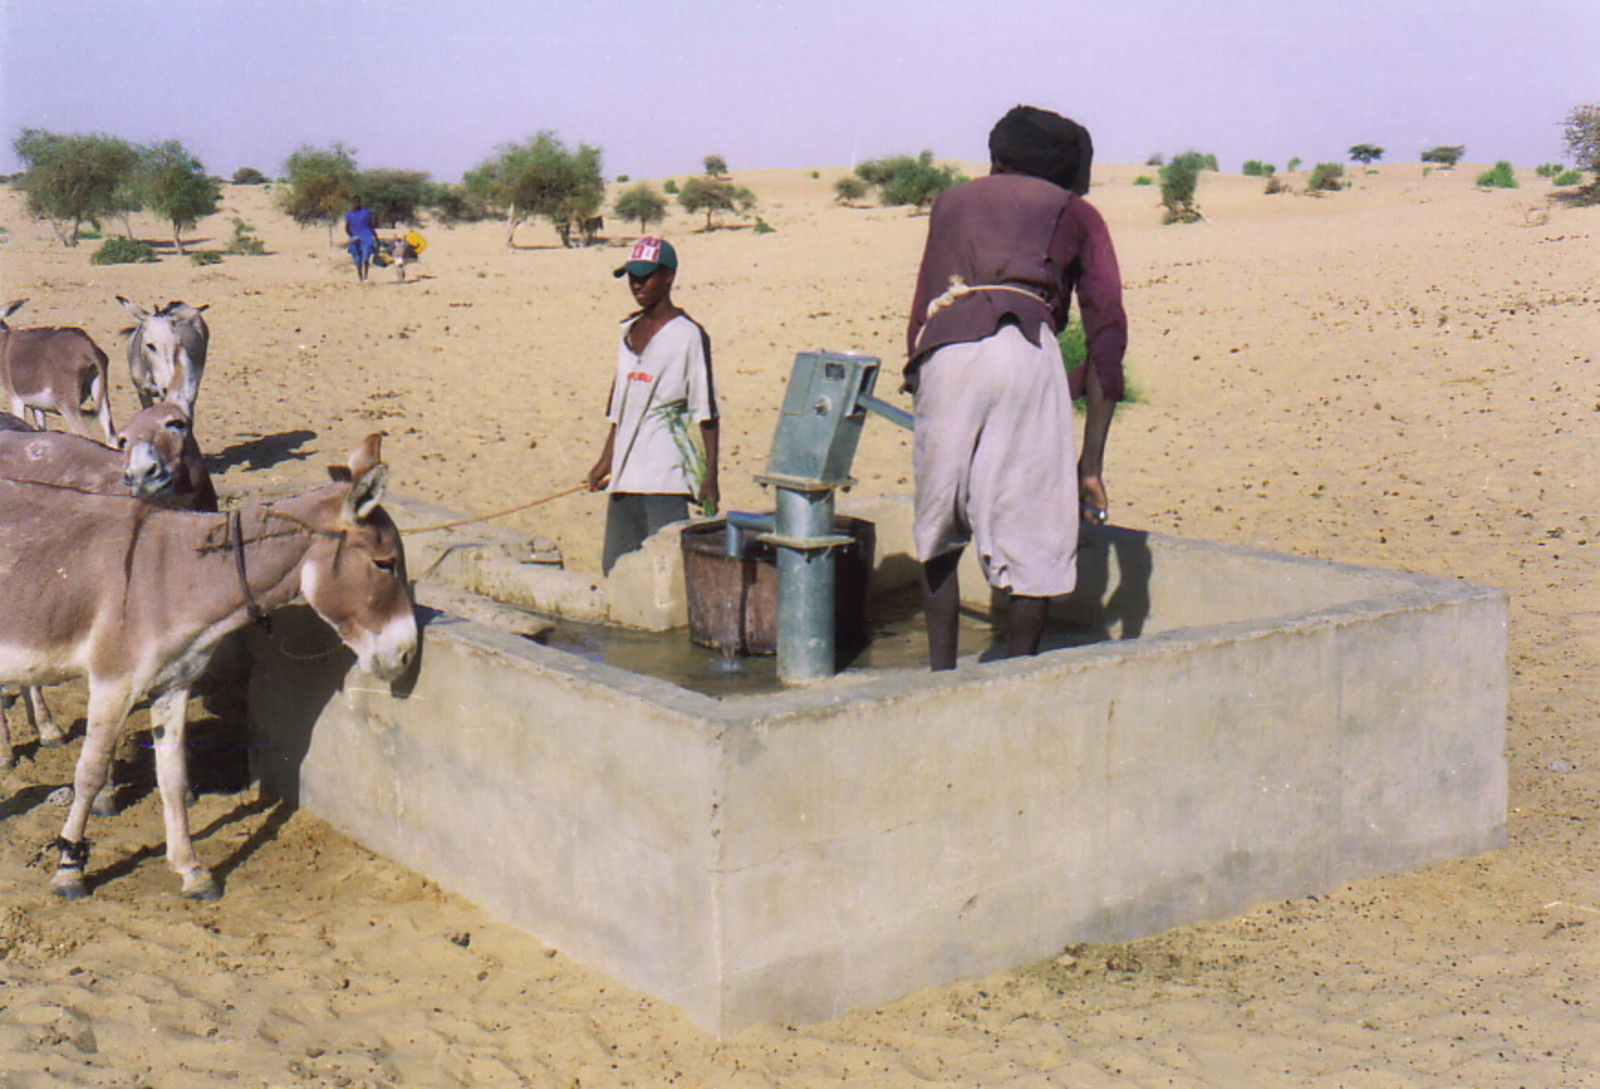 A water pump in the desert